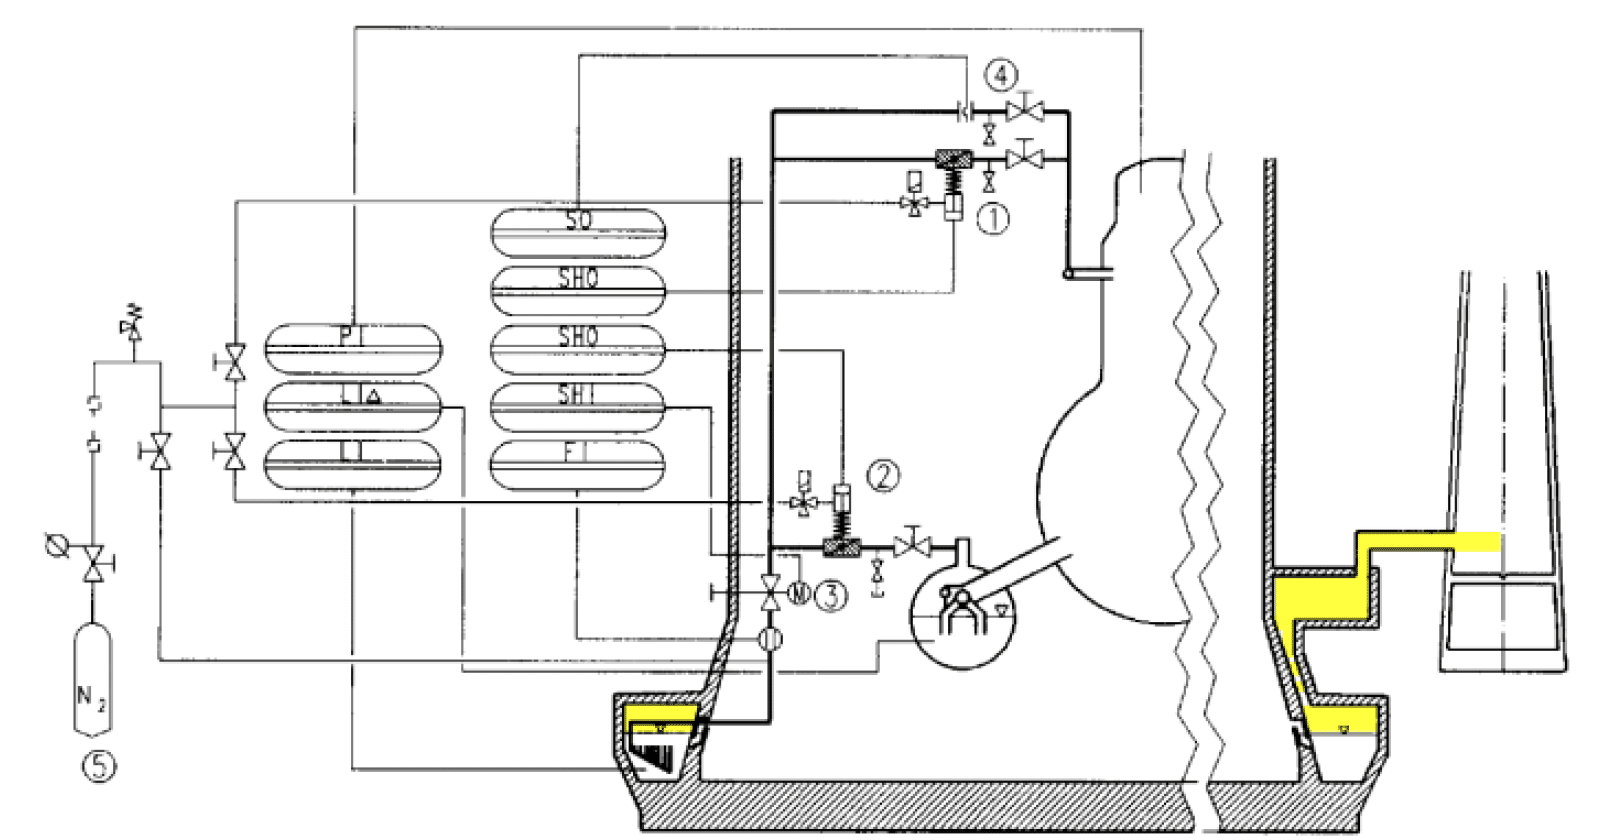 Figure 6 Gefilterte Druckentlastung KKM; Quelle: Pressure release of containments during severe accidents in Switzerland, H. Rust et al. / Nuclear Engineering and Design 157 (1995) 337-352, p. 350, Figure 11